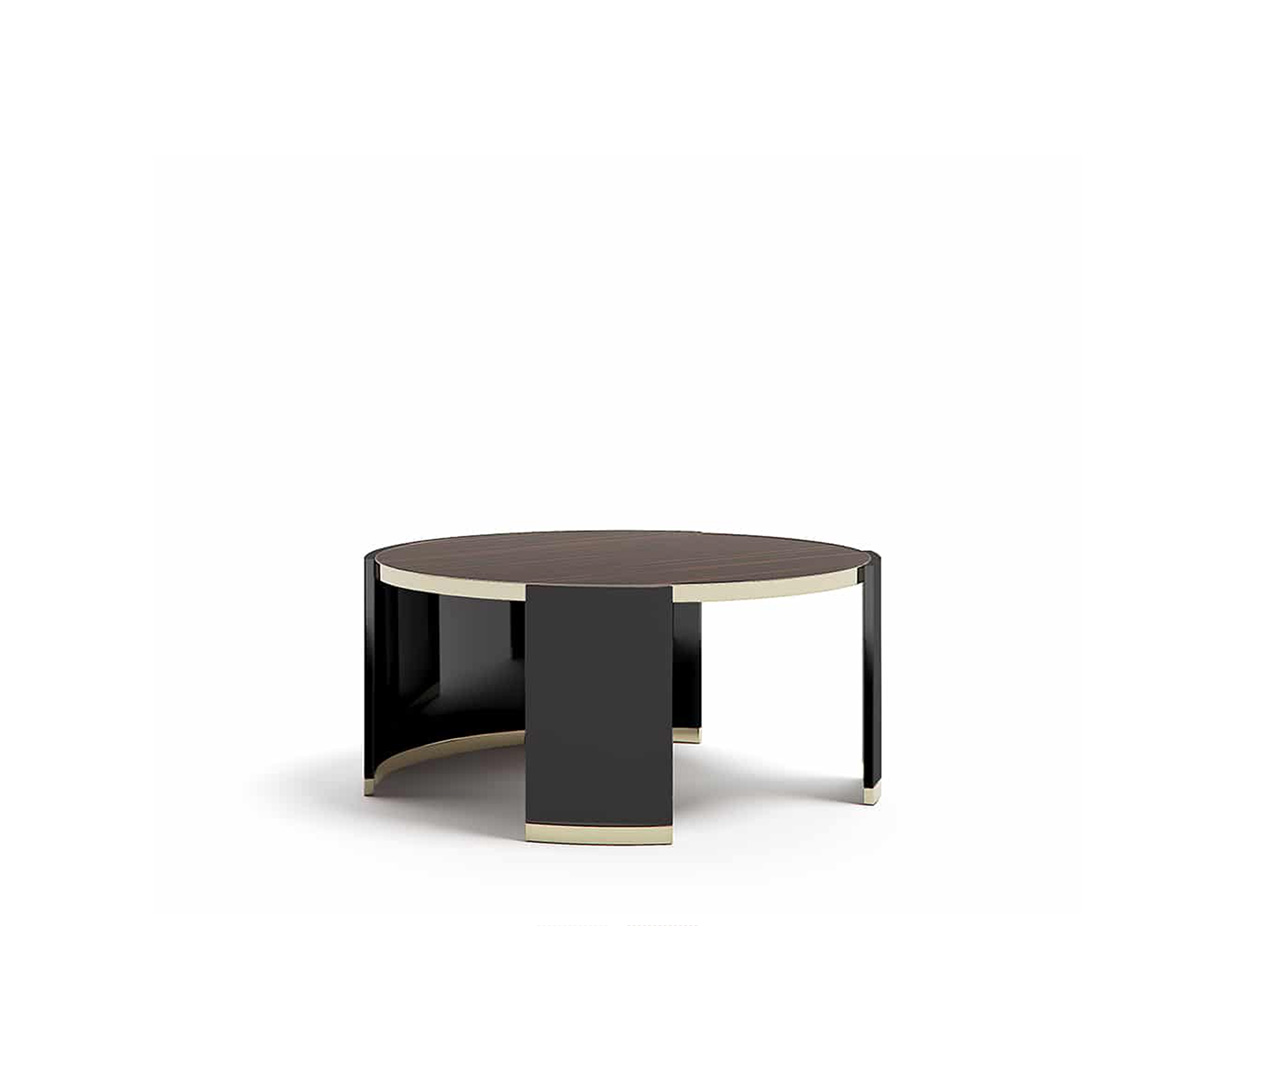 BOLD's modern black coffee table